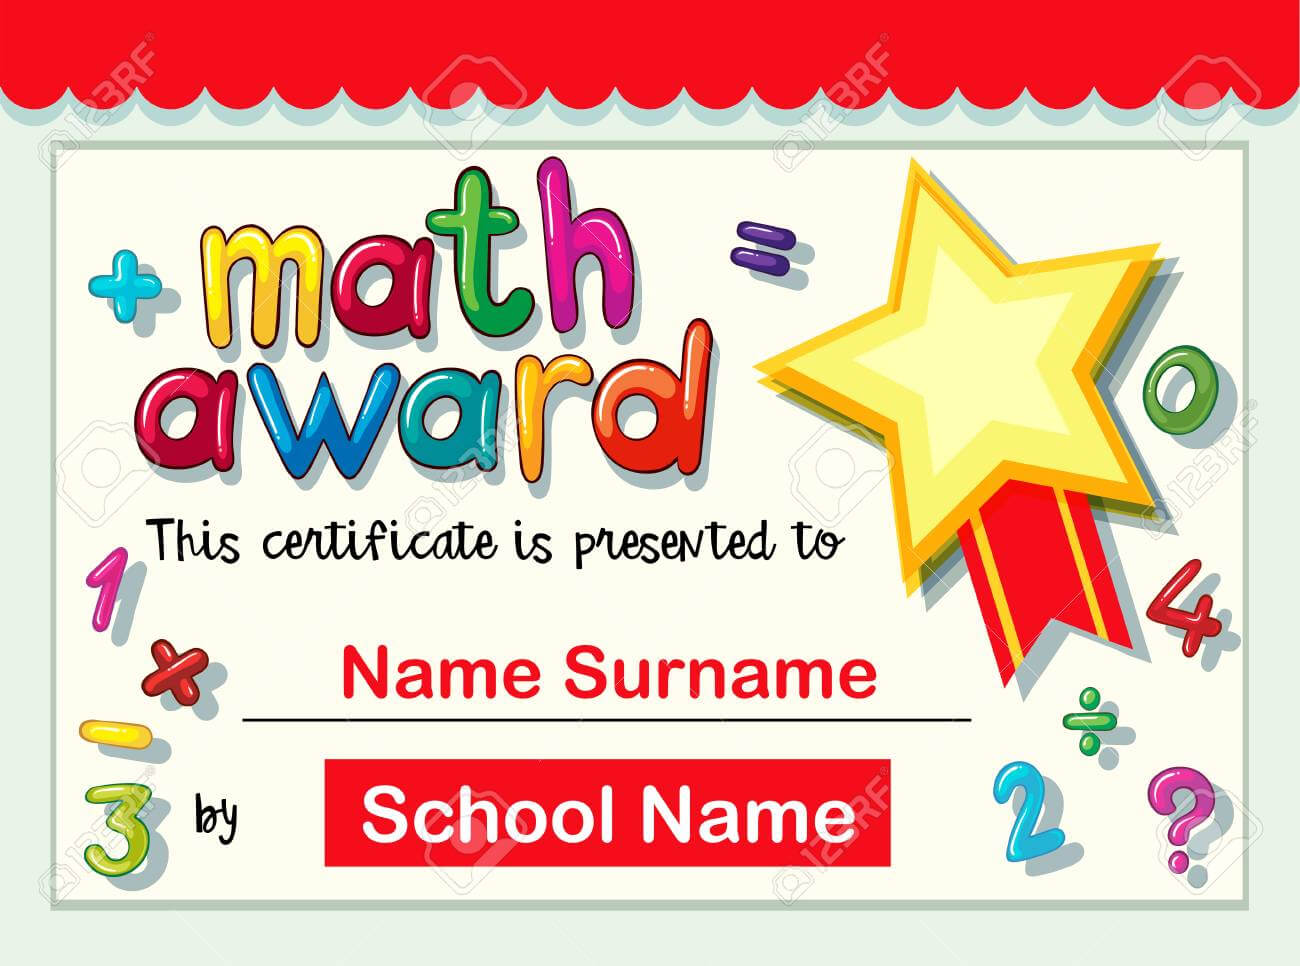 Certificate Template For Math Award Illustration With Regard To Math Certificate Template